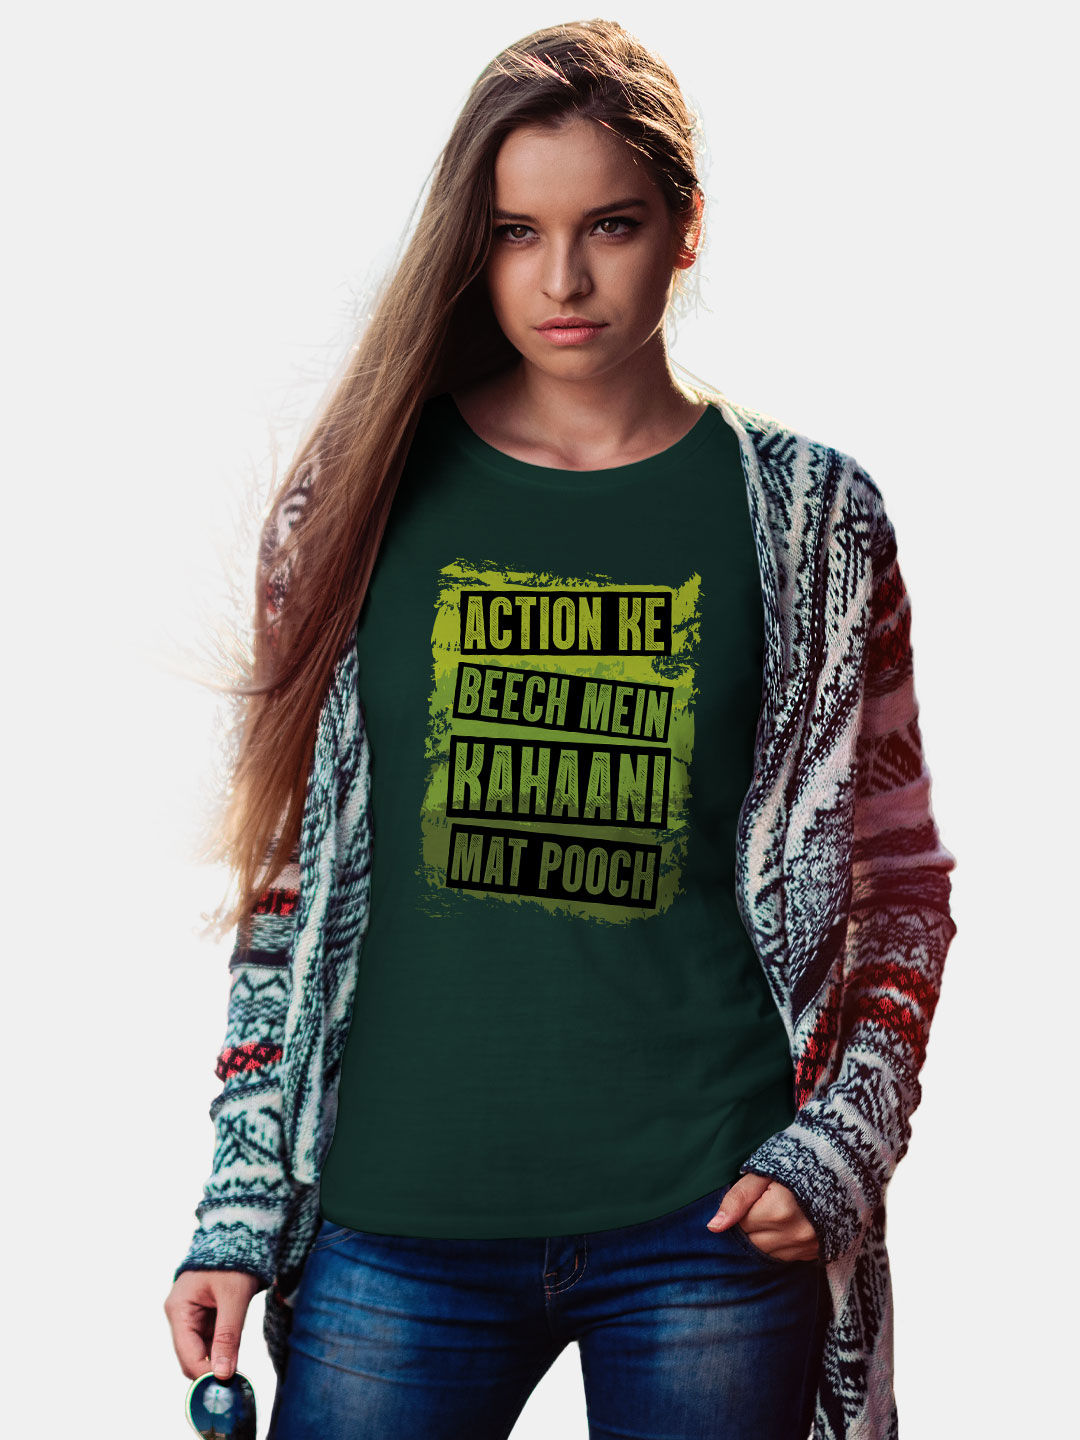 Buy Shehzada Kahaani - Female Designer T-Shirts T-Shirts Online